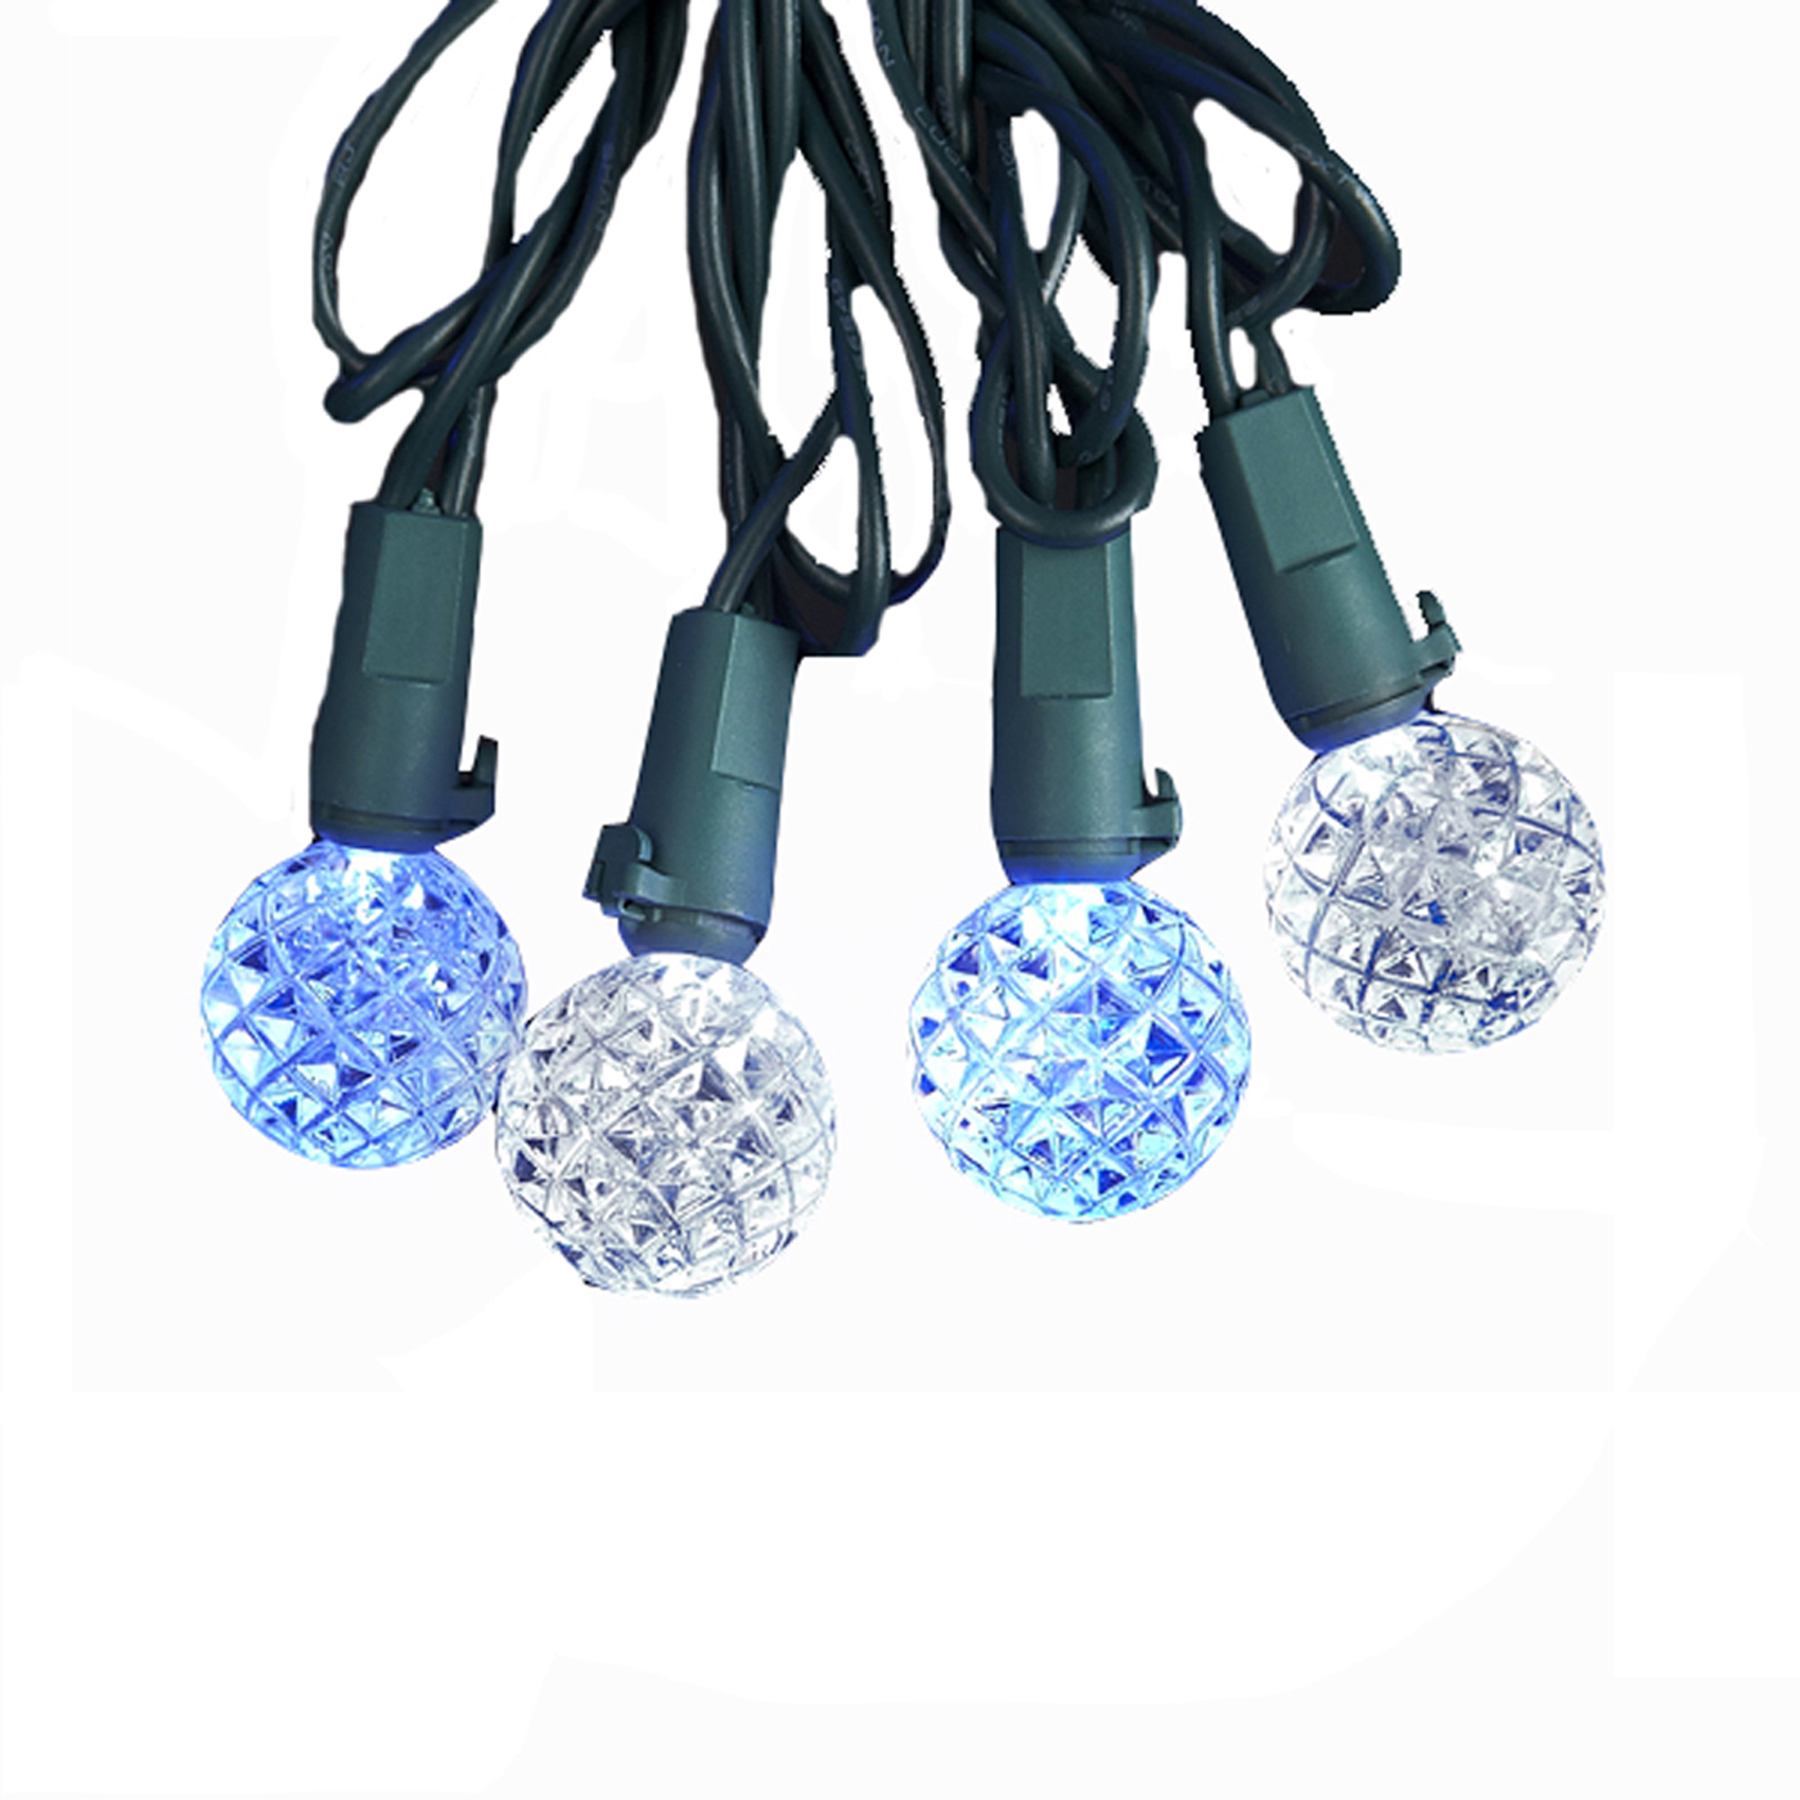 Kurt Adler UL 25-Light LED G8 White and Blue Diamond Cut Holiday Light Set